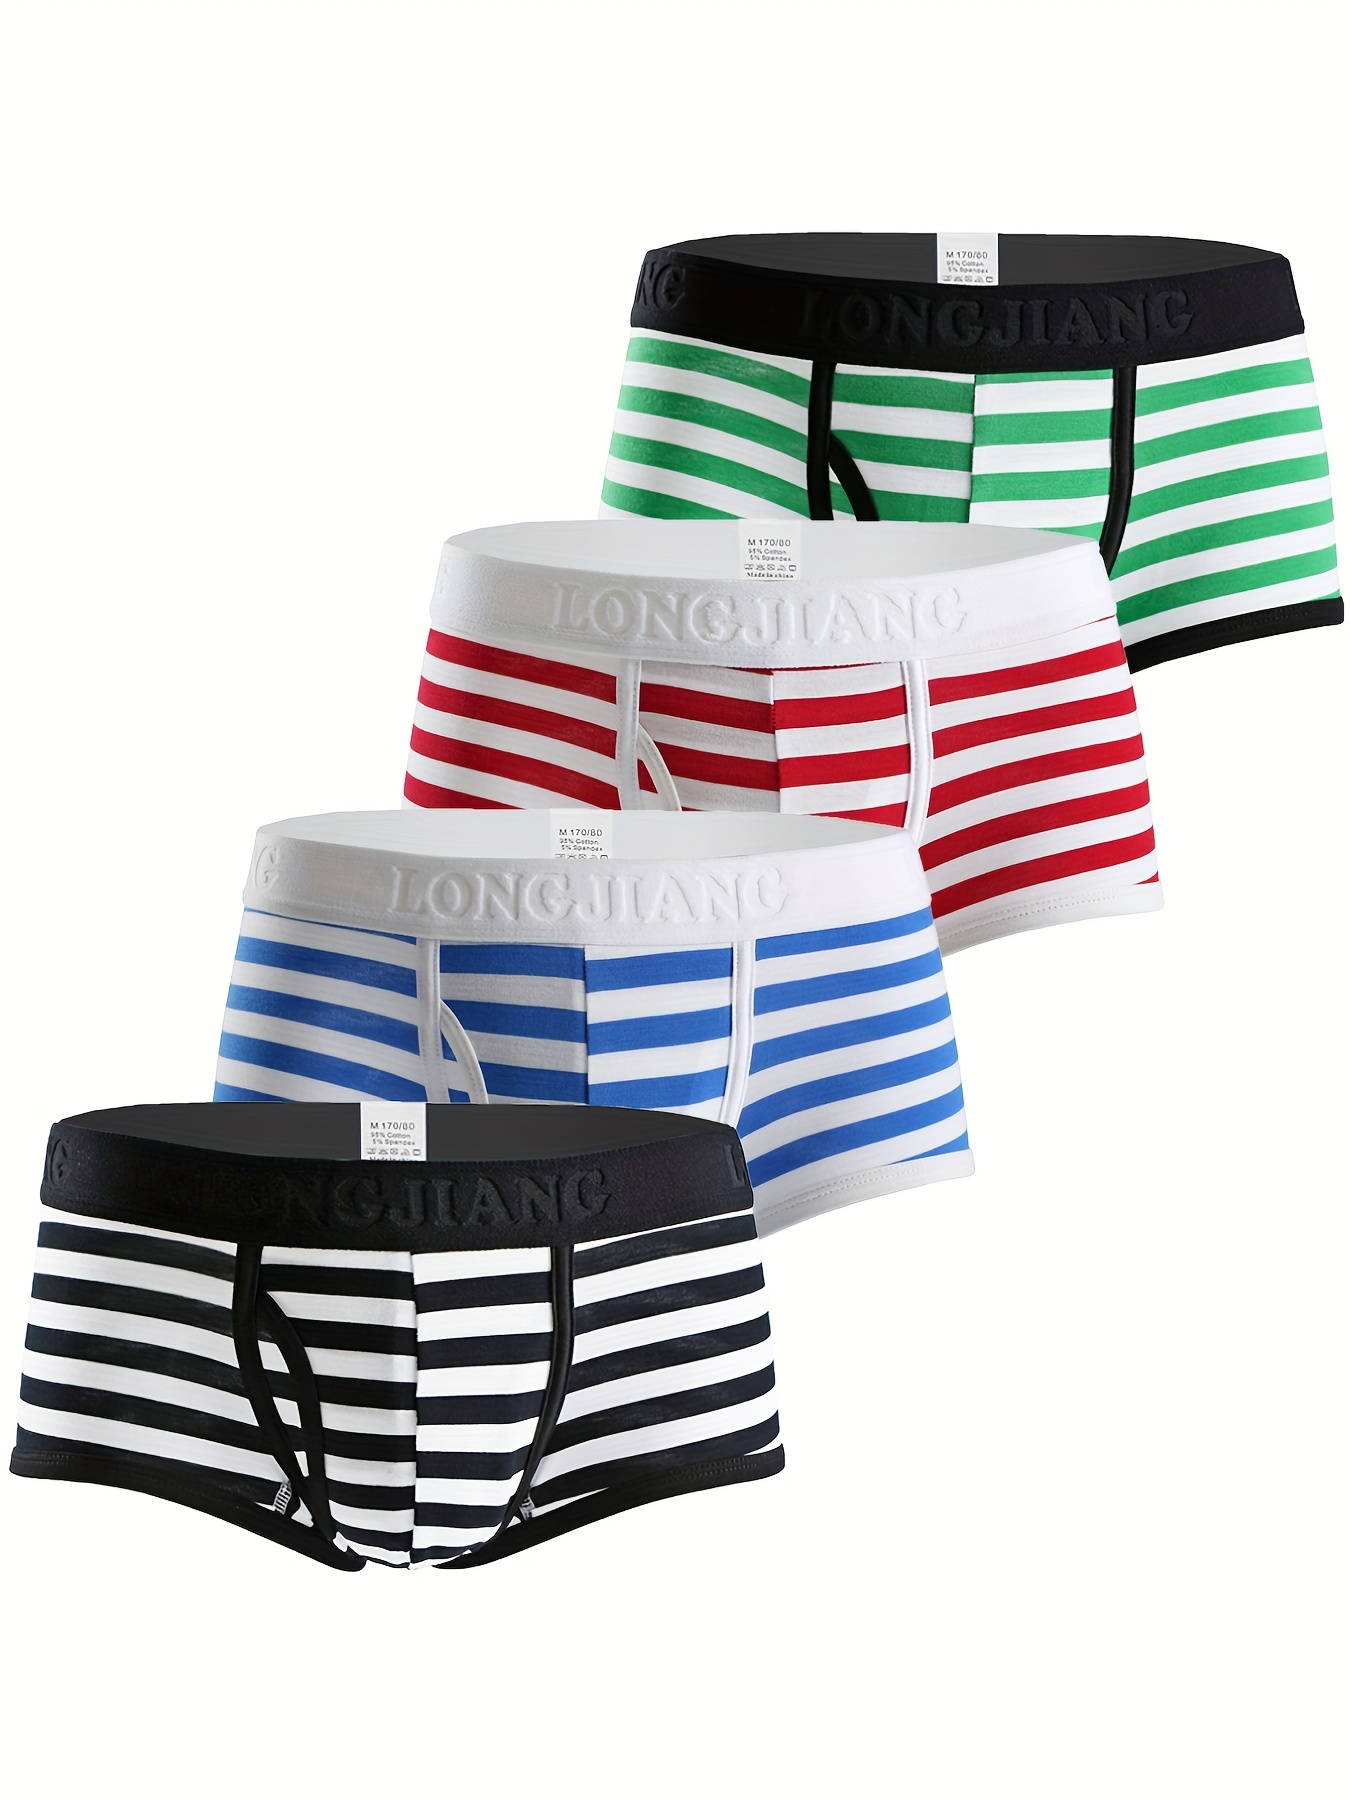 kqetty Underwear Man Boxers Men's Solid Stripe Boxer Pants Men